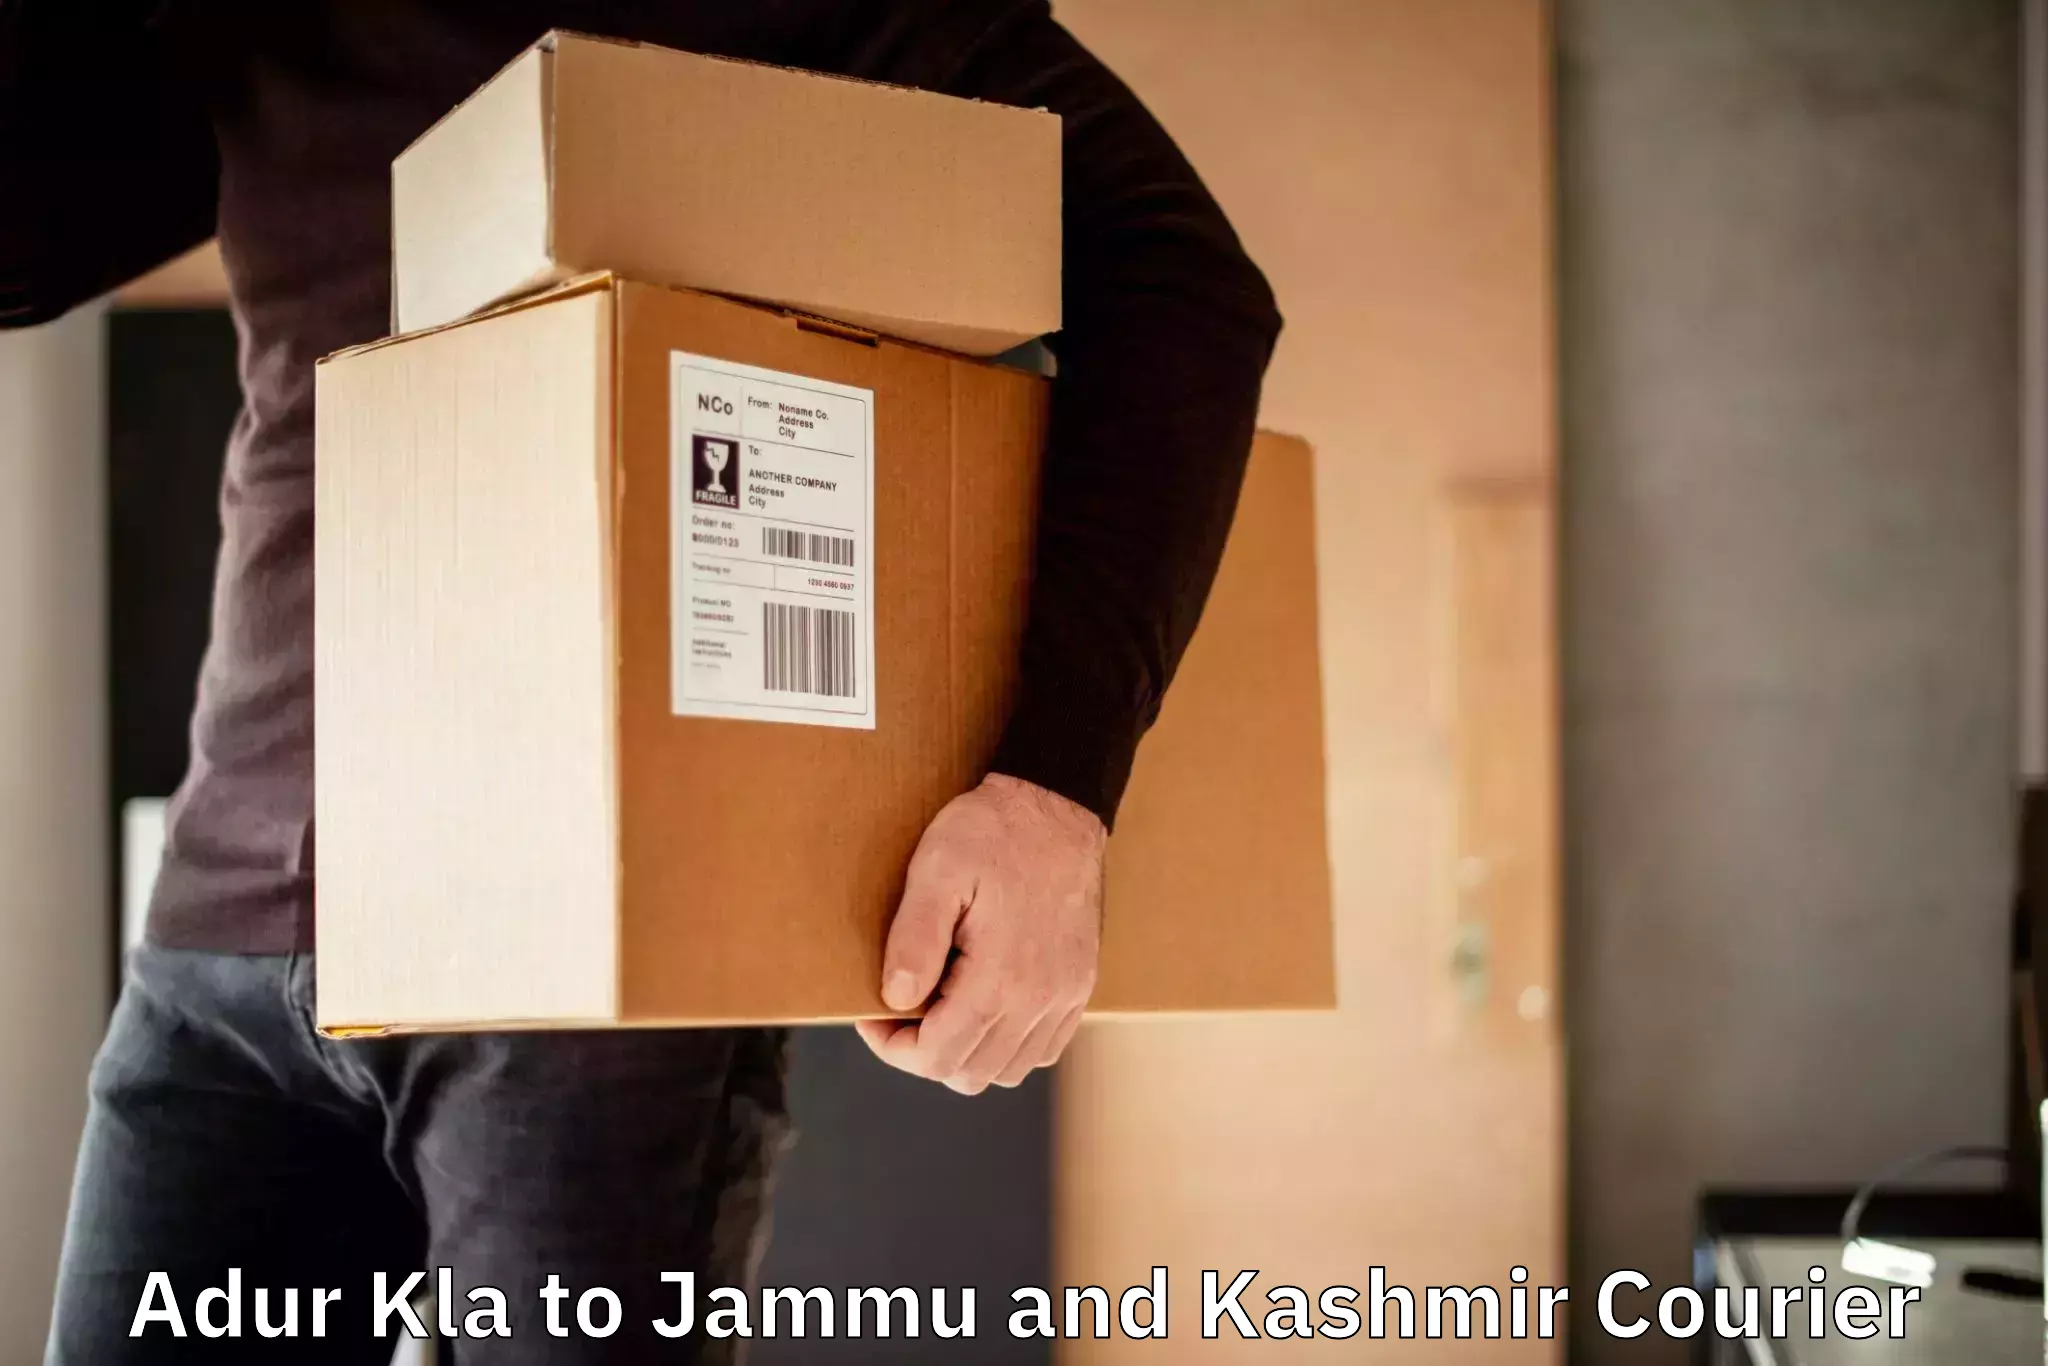 Local delivery service Adur Kla to Jammu and Kashmir